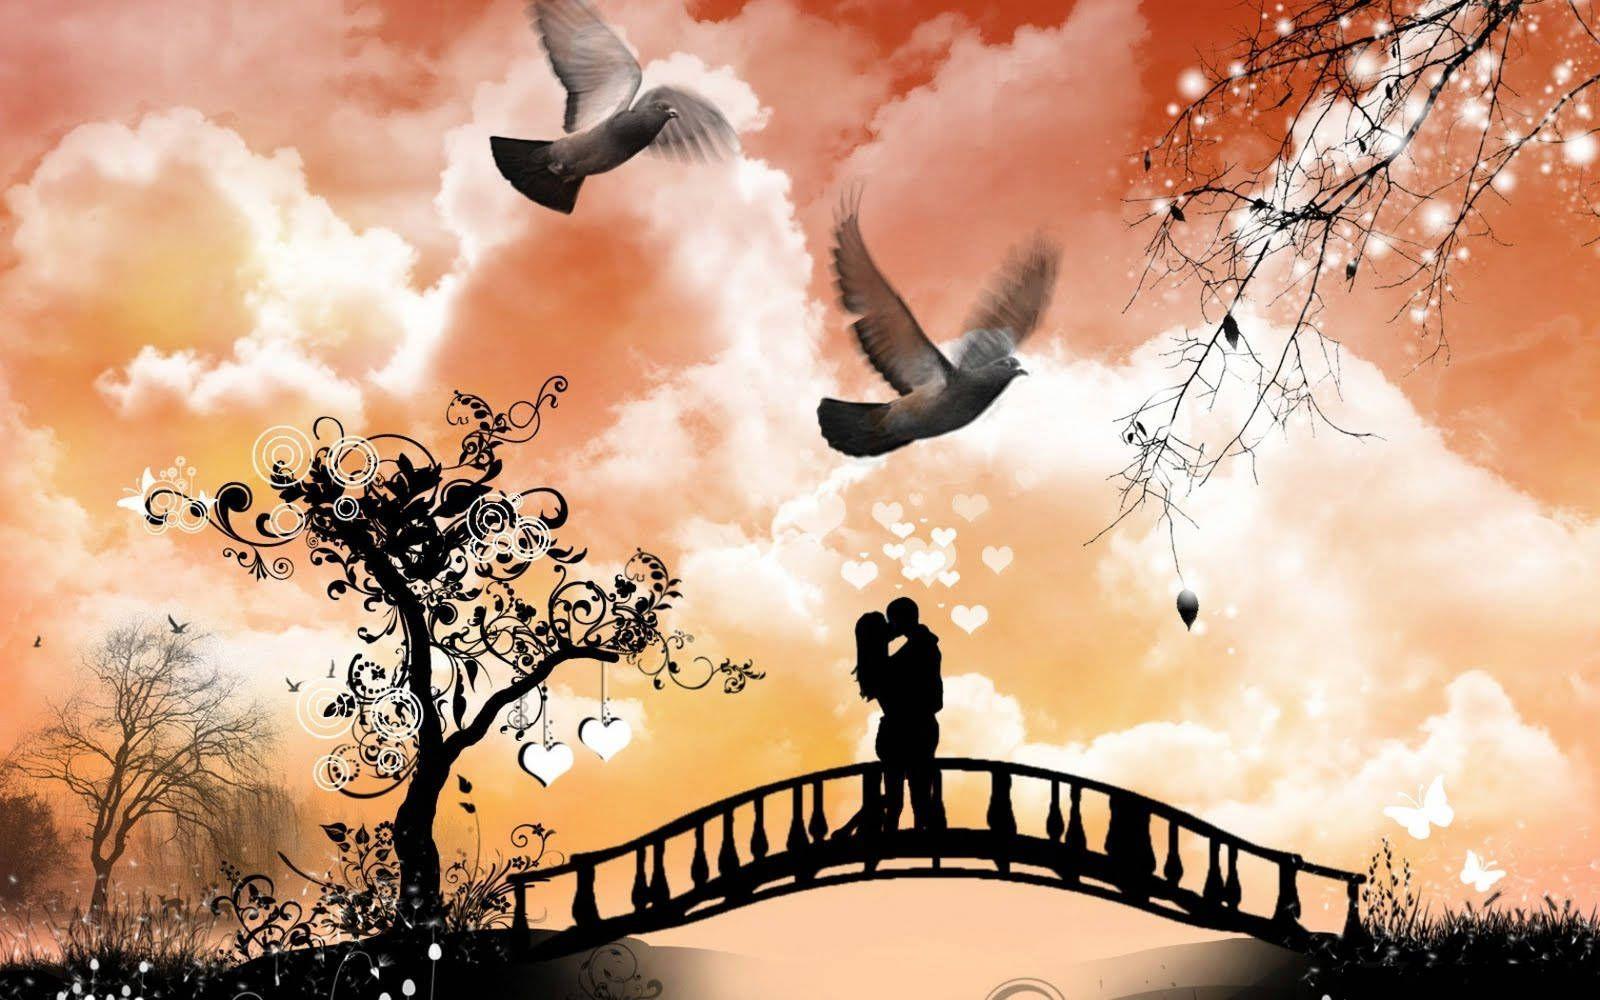 Animated Love Wallpaper for mobile